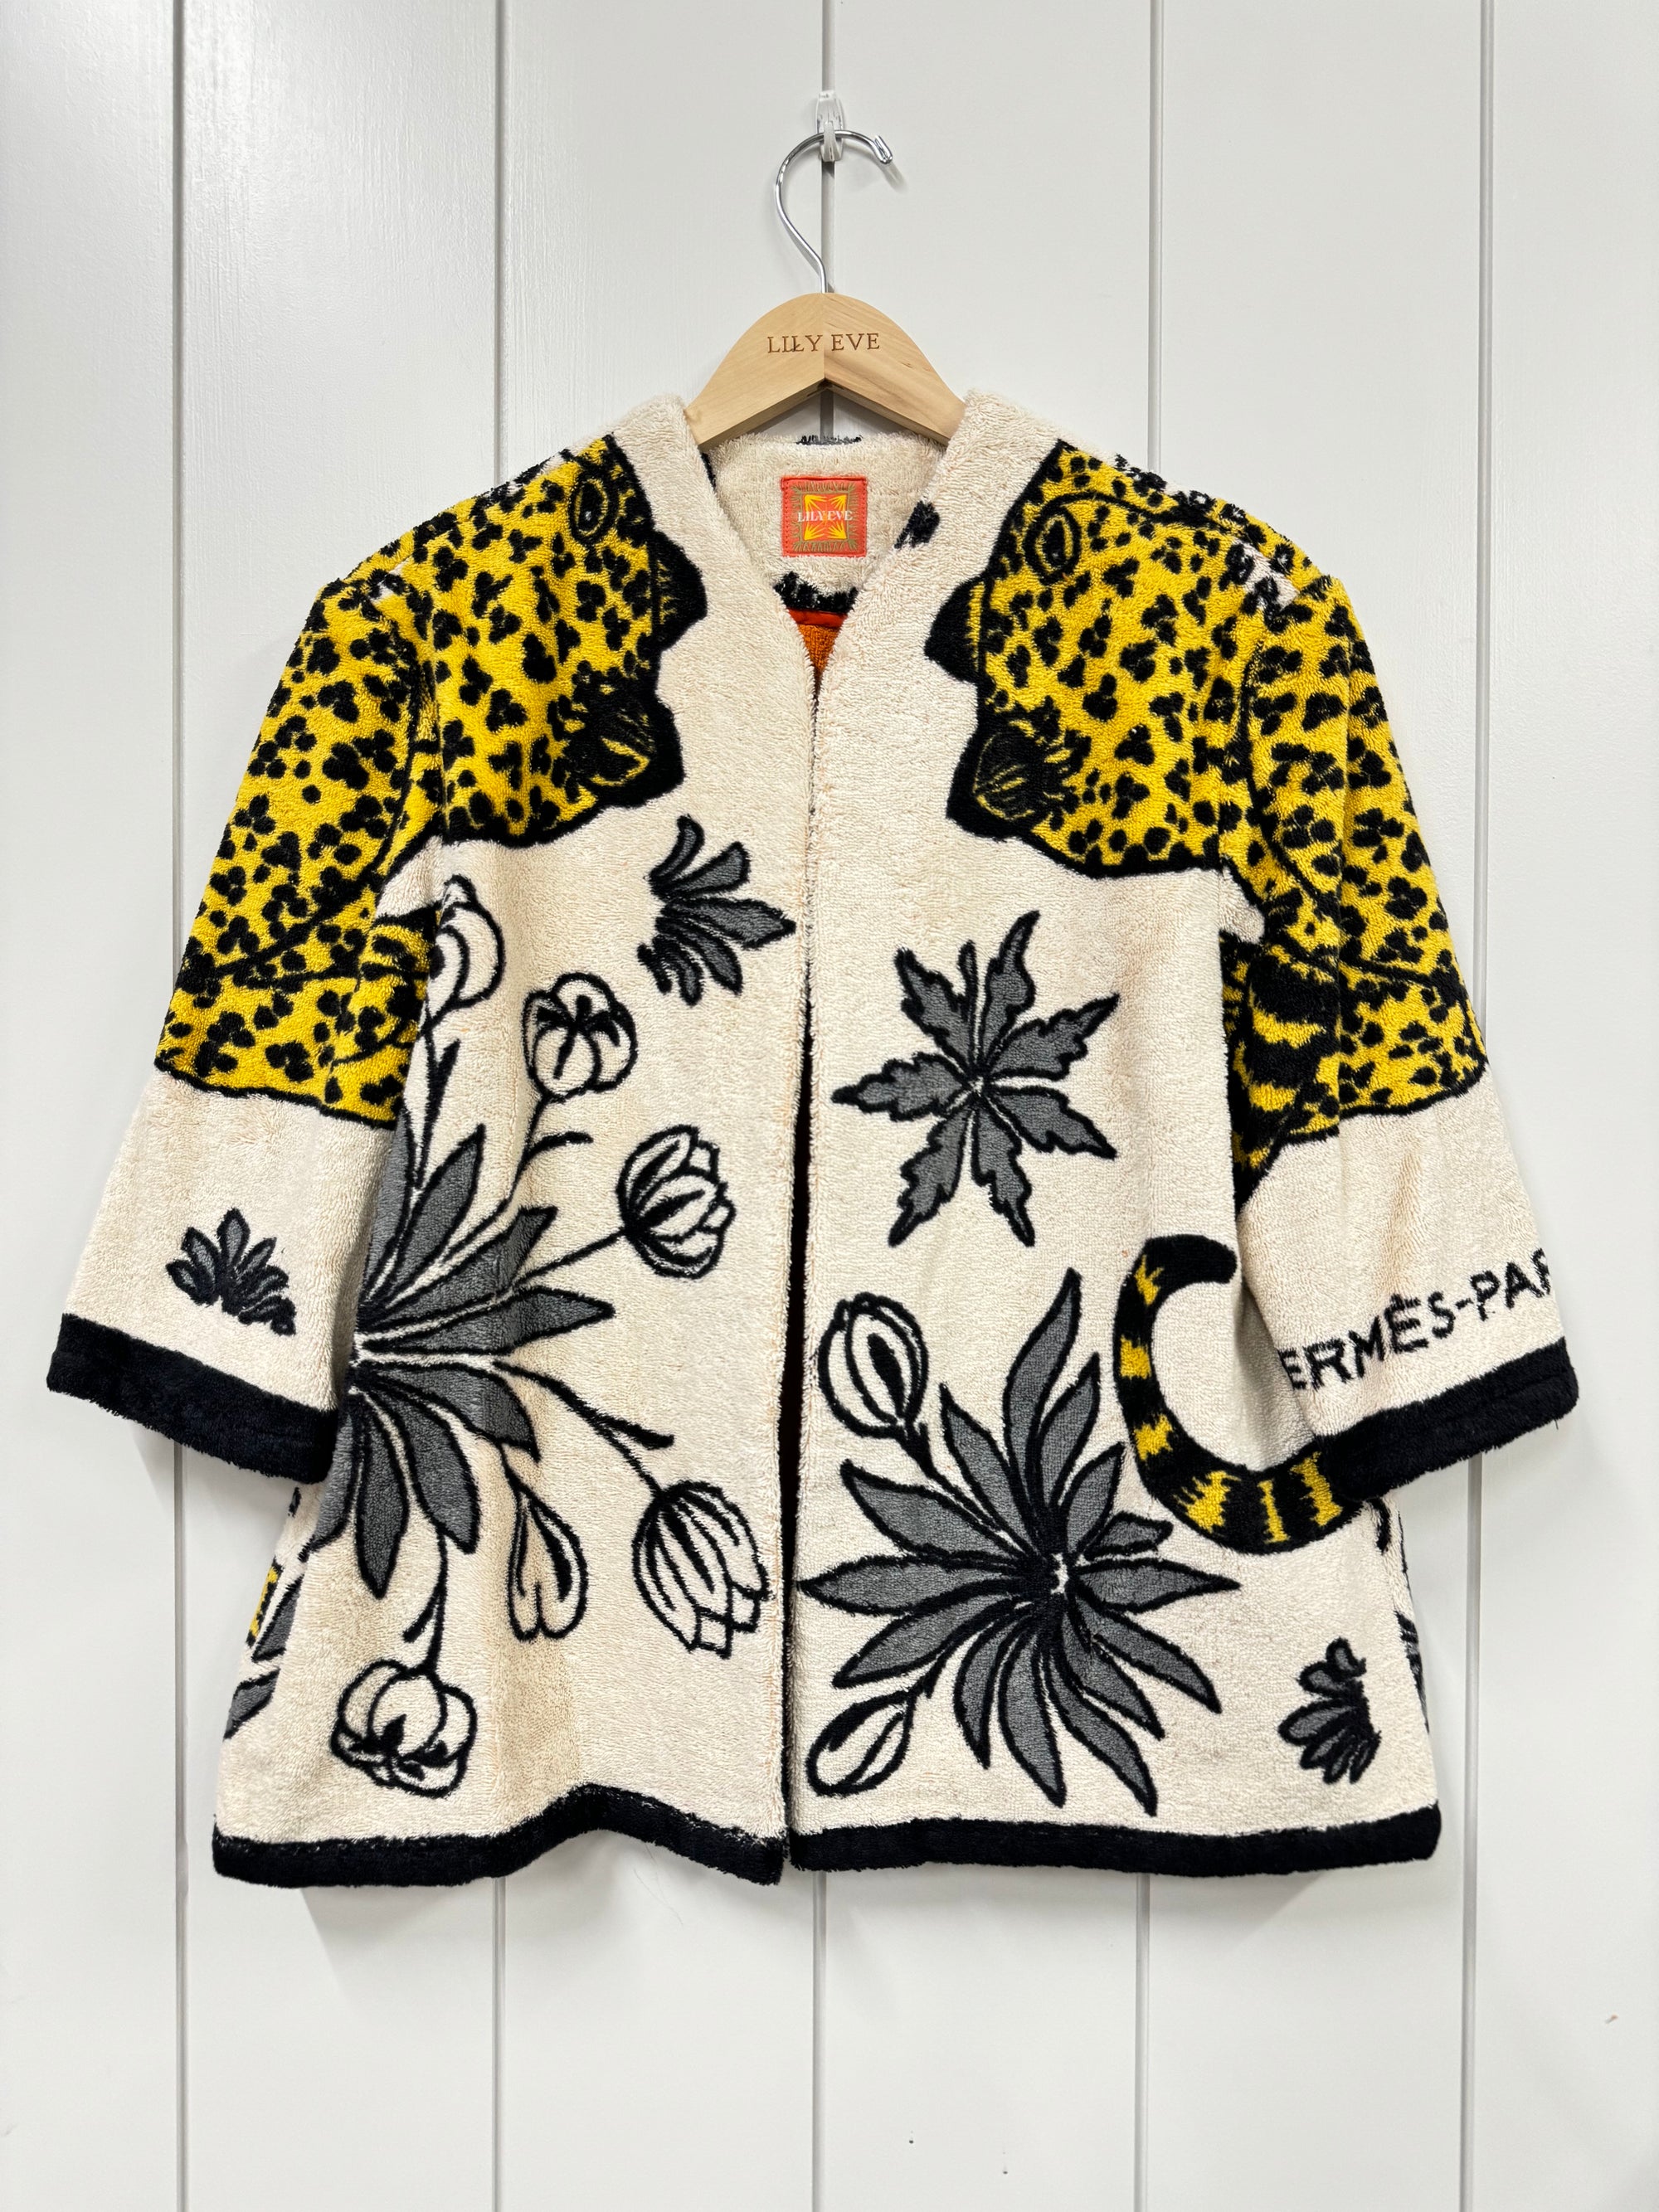 The Leopard Print Jacket